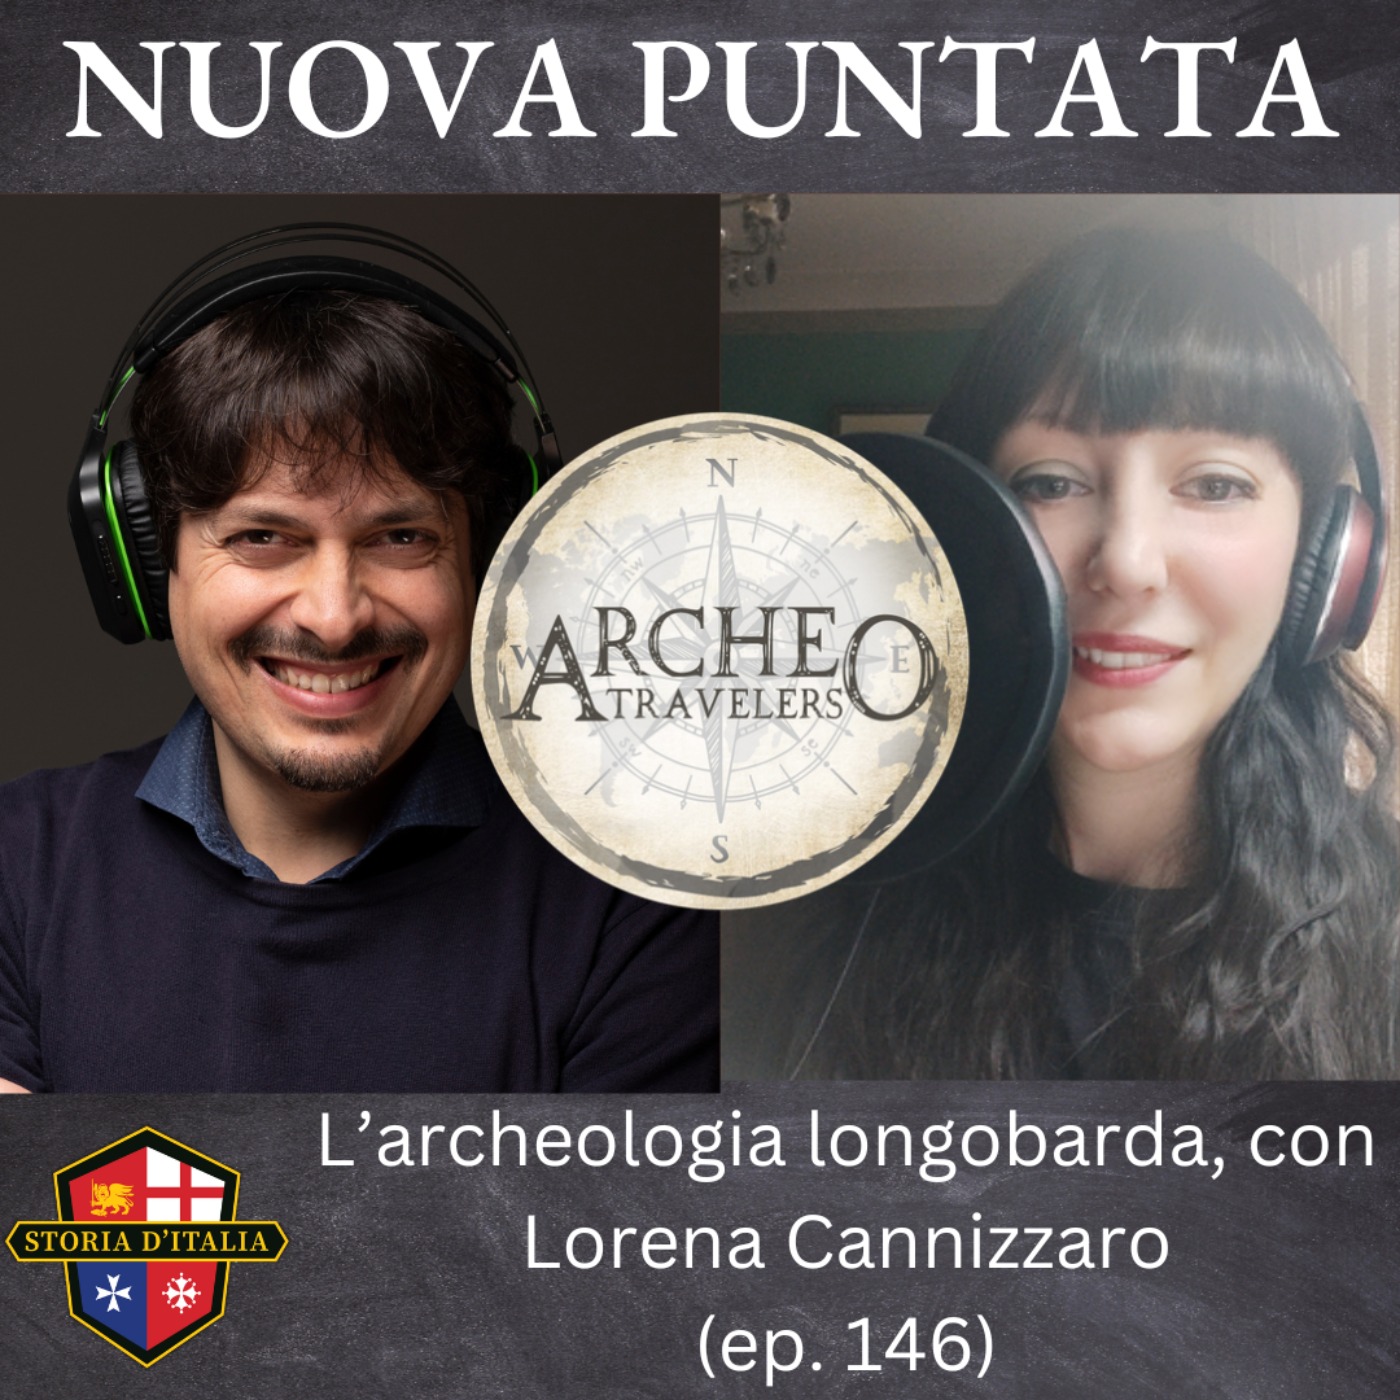 L’archeologia longobarda, con Lorena Cannizzaro (Archeotravelers), ep. 146